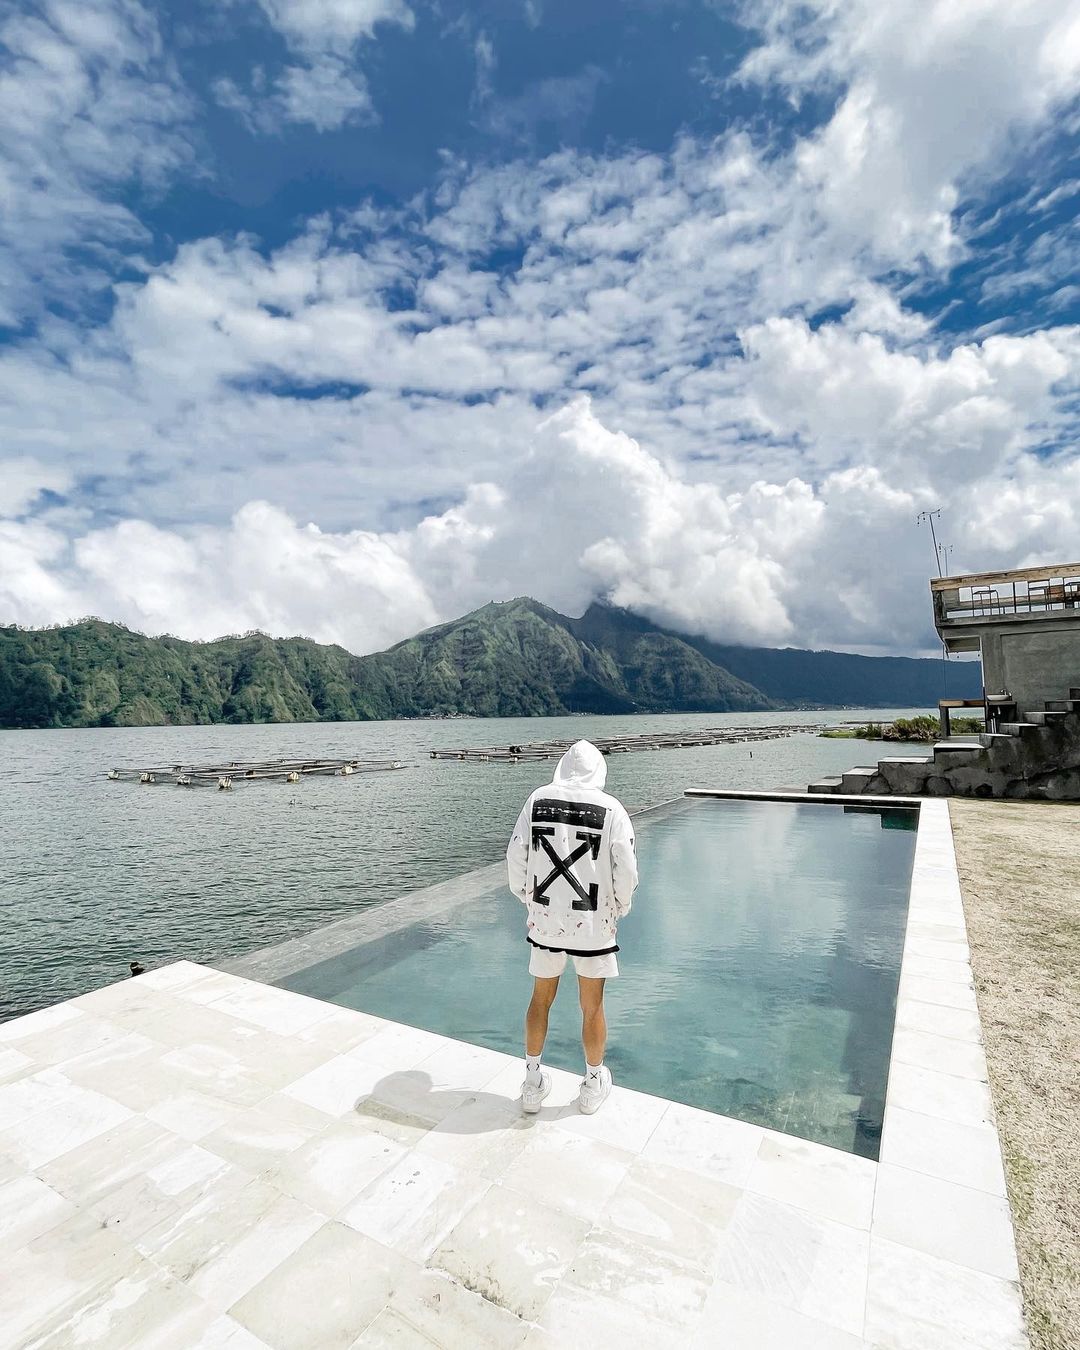 Lokasi Lake Garden Bali Villa Image From @aadittama